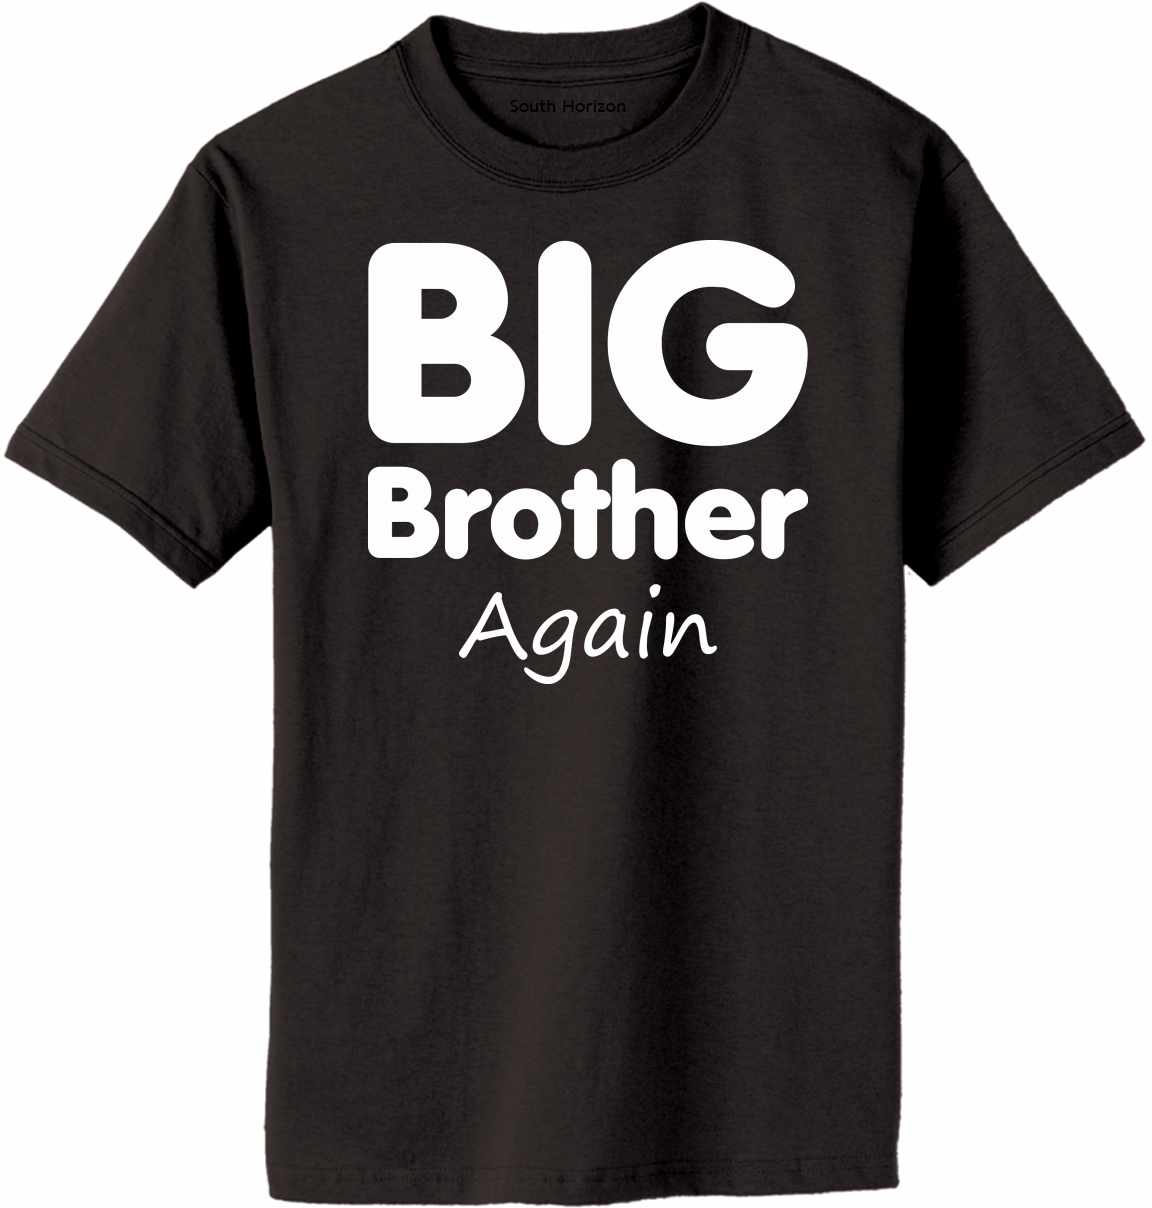 Big Brother Again Adult T-Shirt (#858-1)